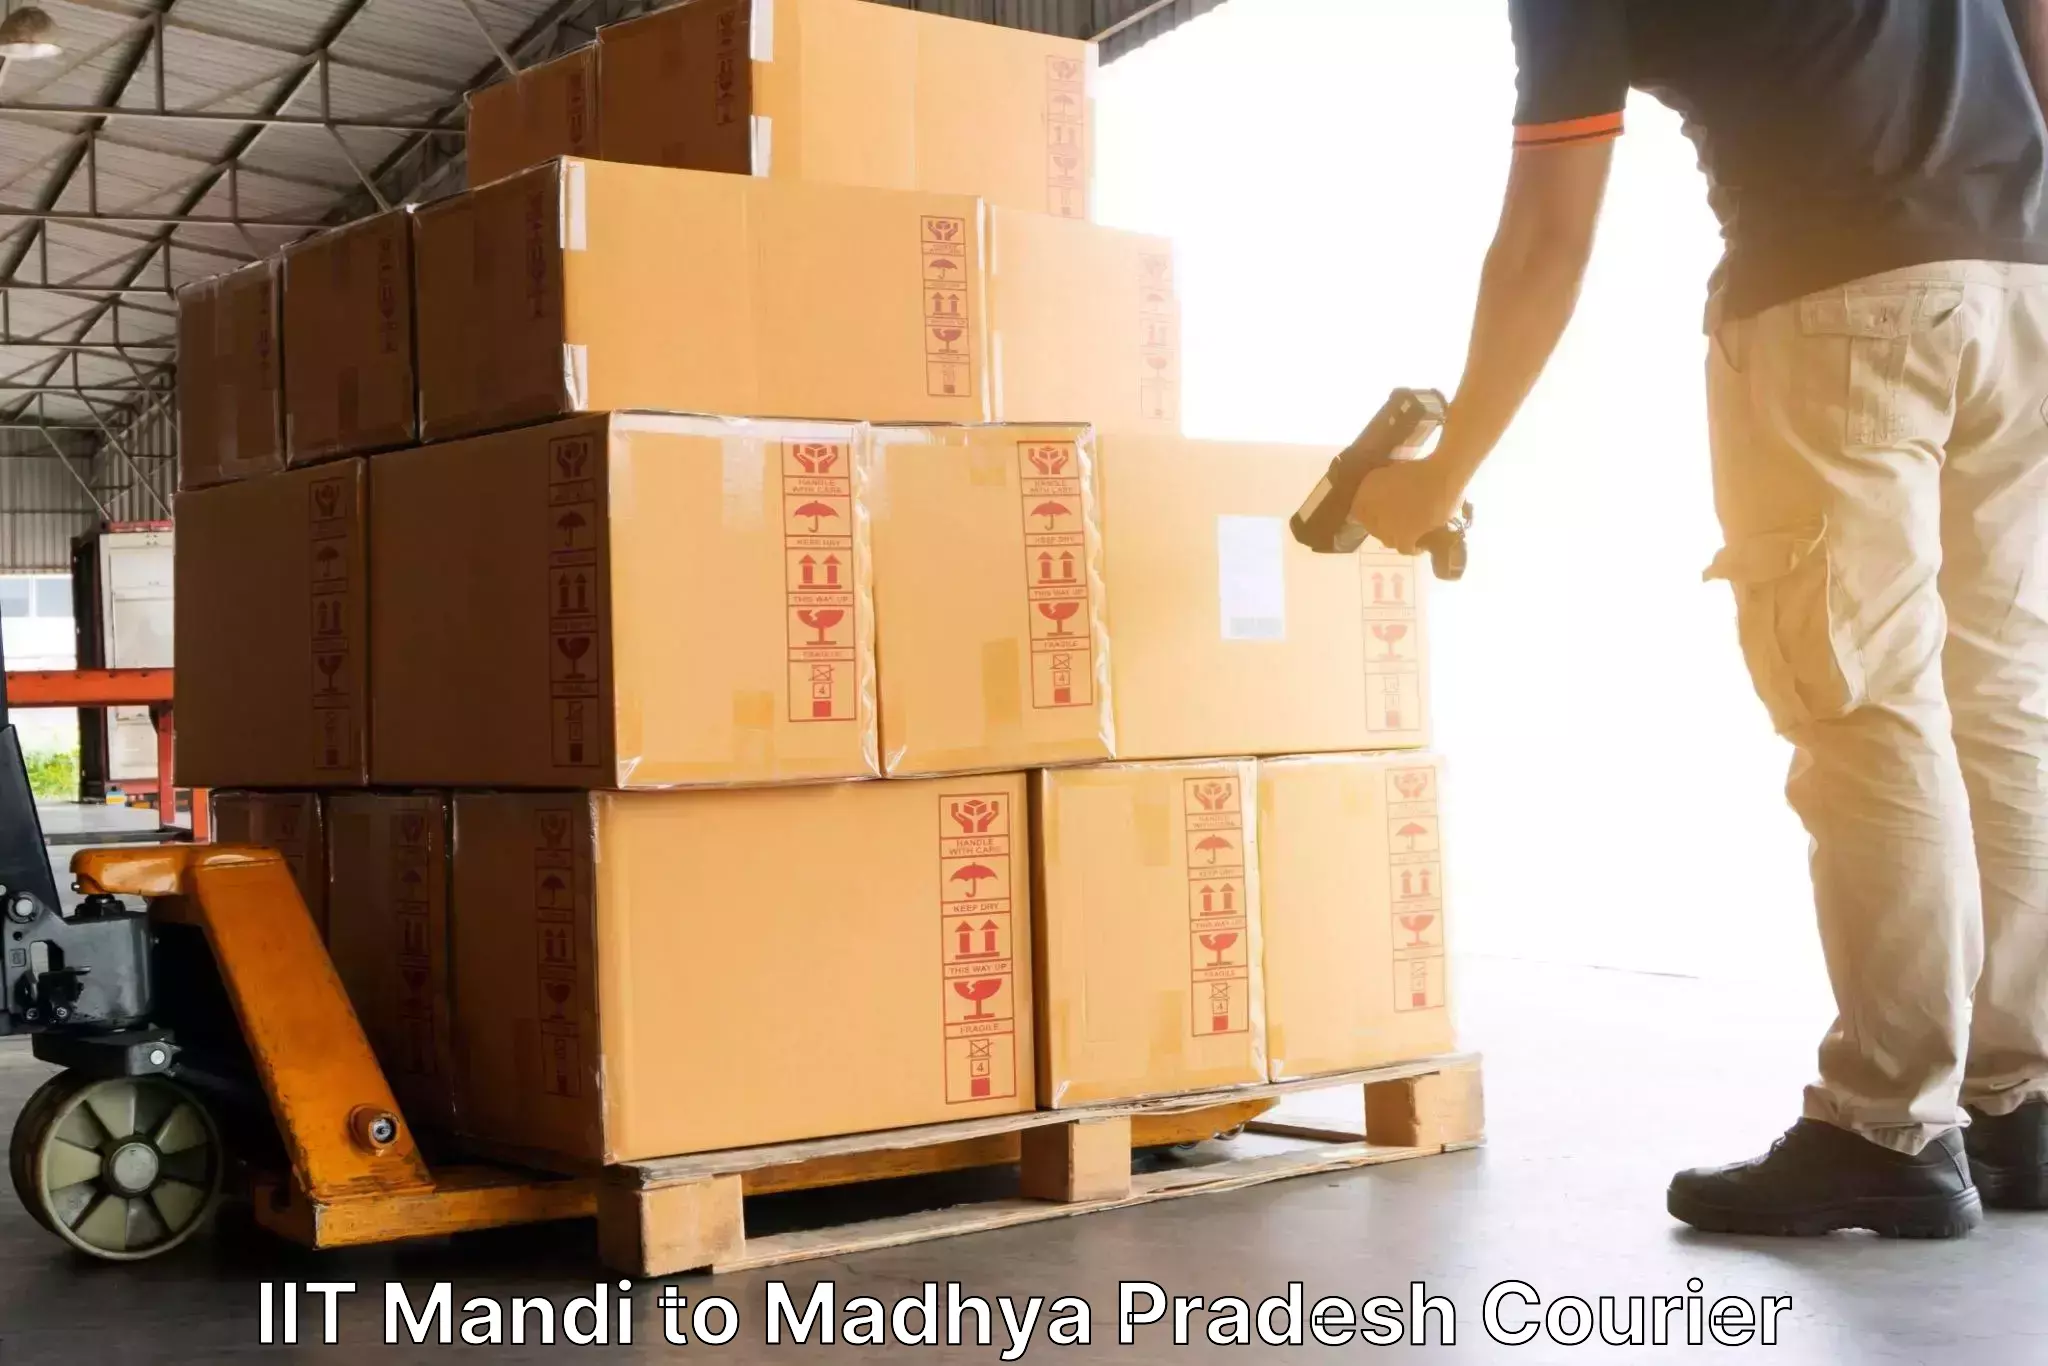 Courier service partnerships IIT Mandi to Satna